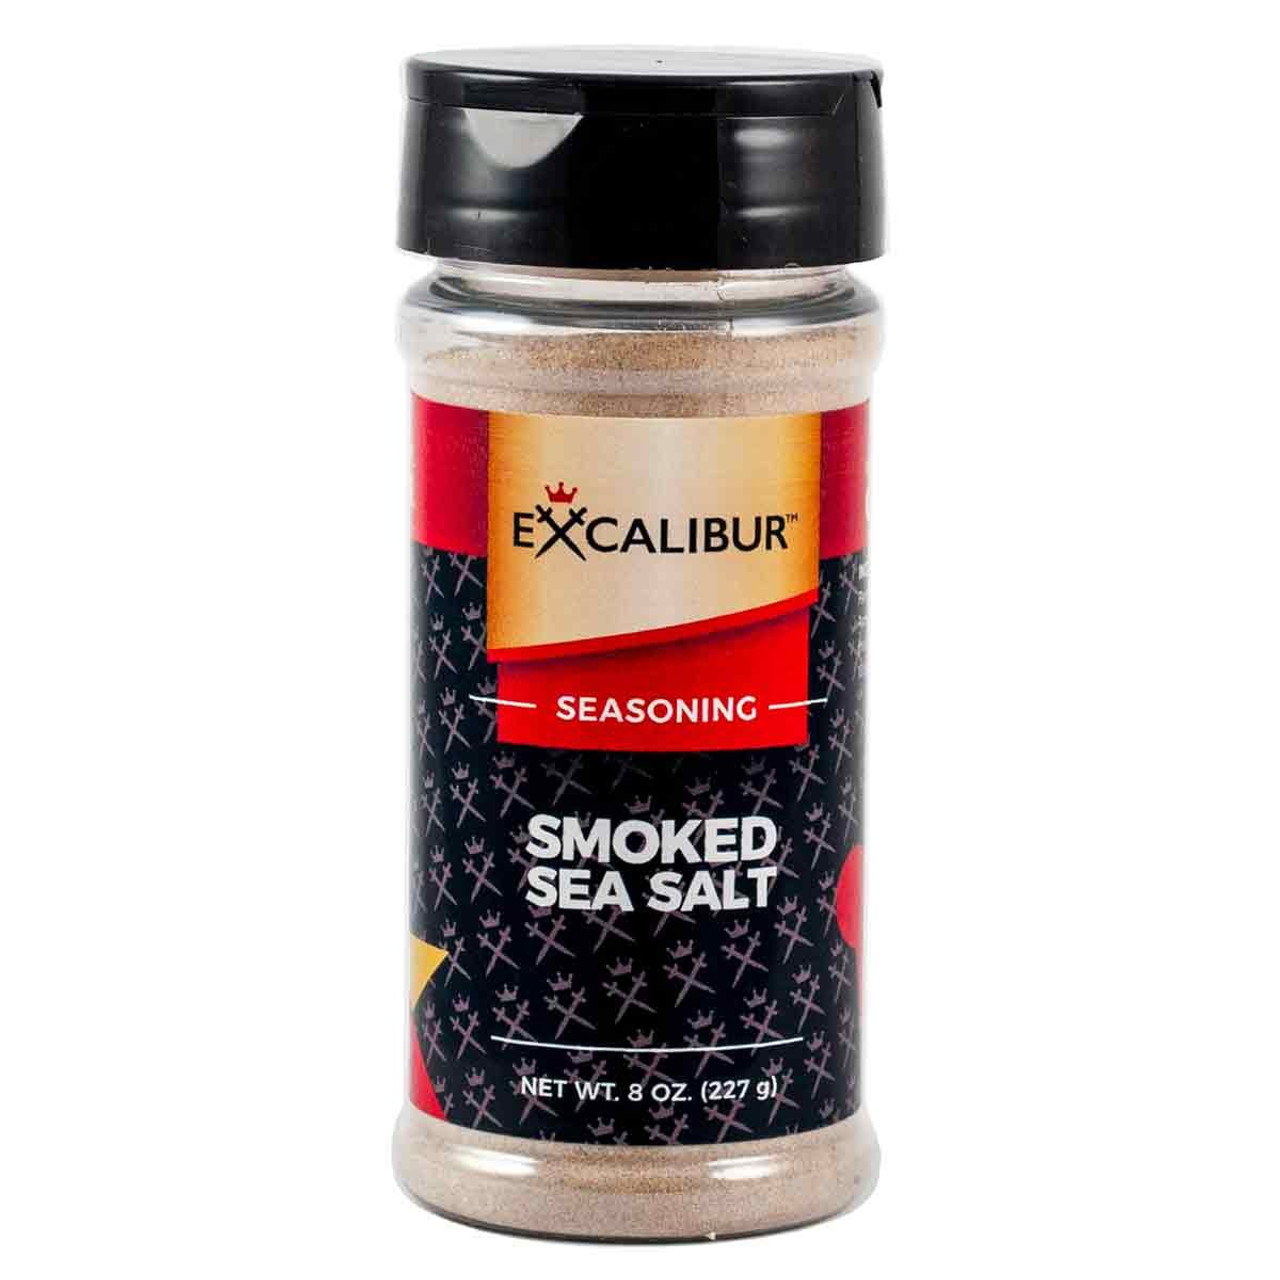 Smoked Bacon Sea Salt - Red Stick Spice Company